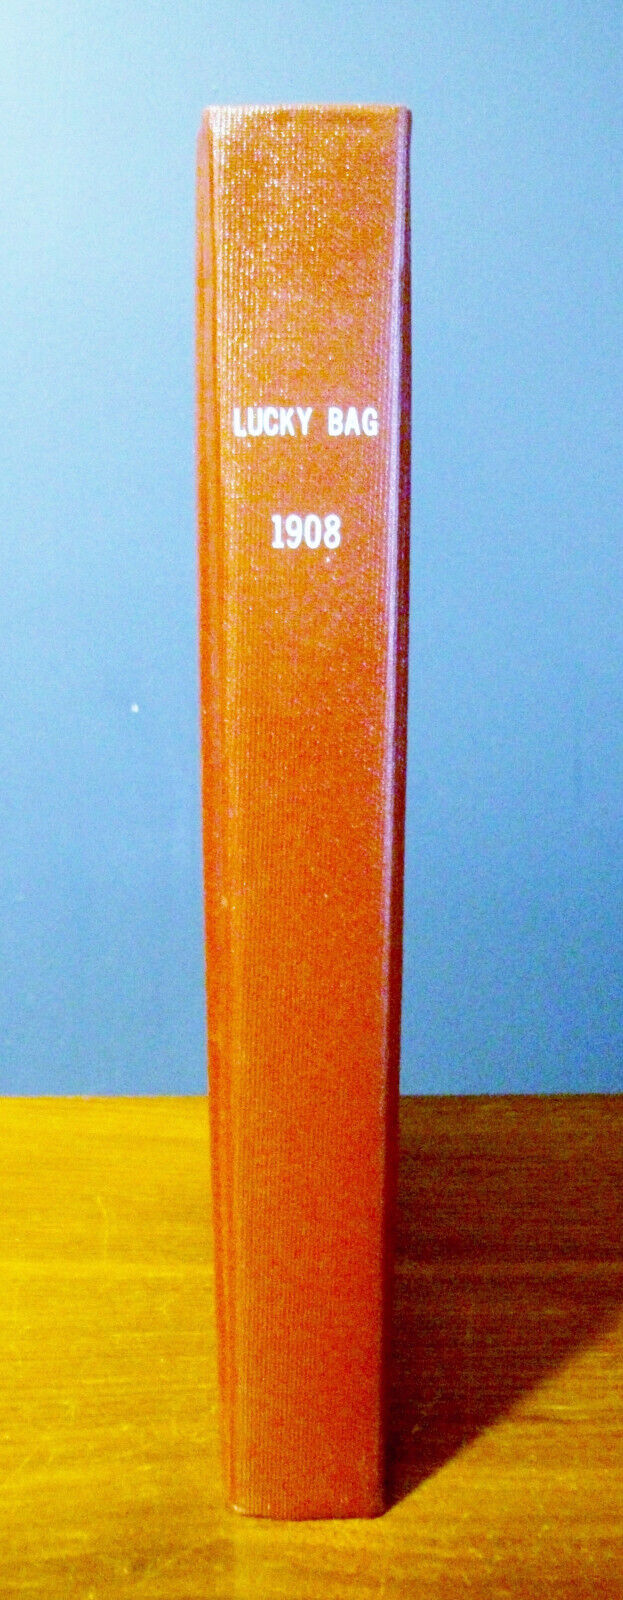 USNA Naval Academy LUCKY BAG Volume XV Yearbook 1908